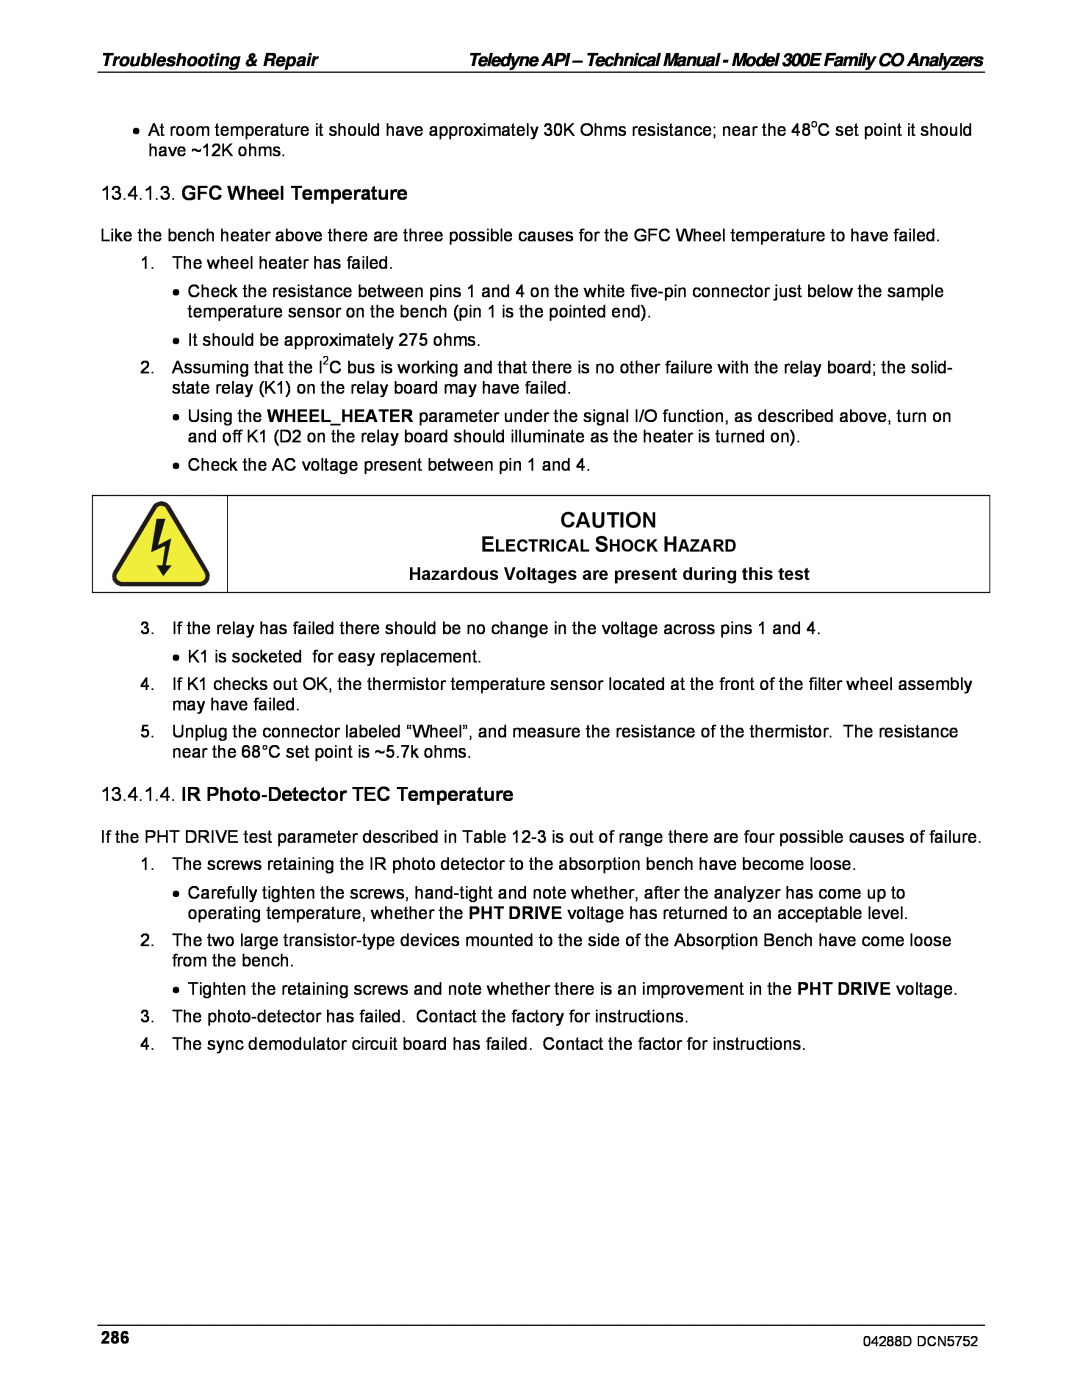 Teledyne M300EM operation manual GFC Wheel Temperature, IR Photo-DetectorTEC Temperature, Electrical Shock Hazard 